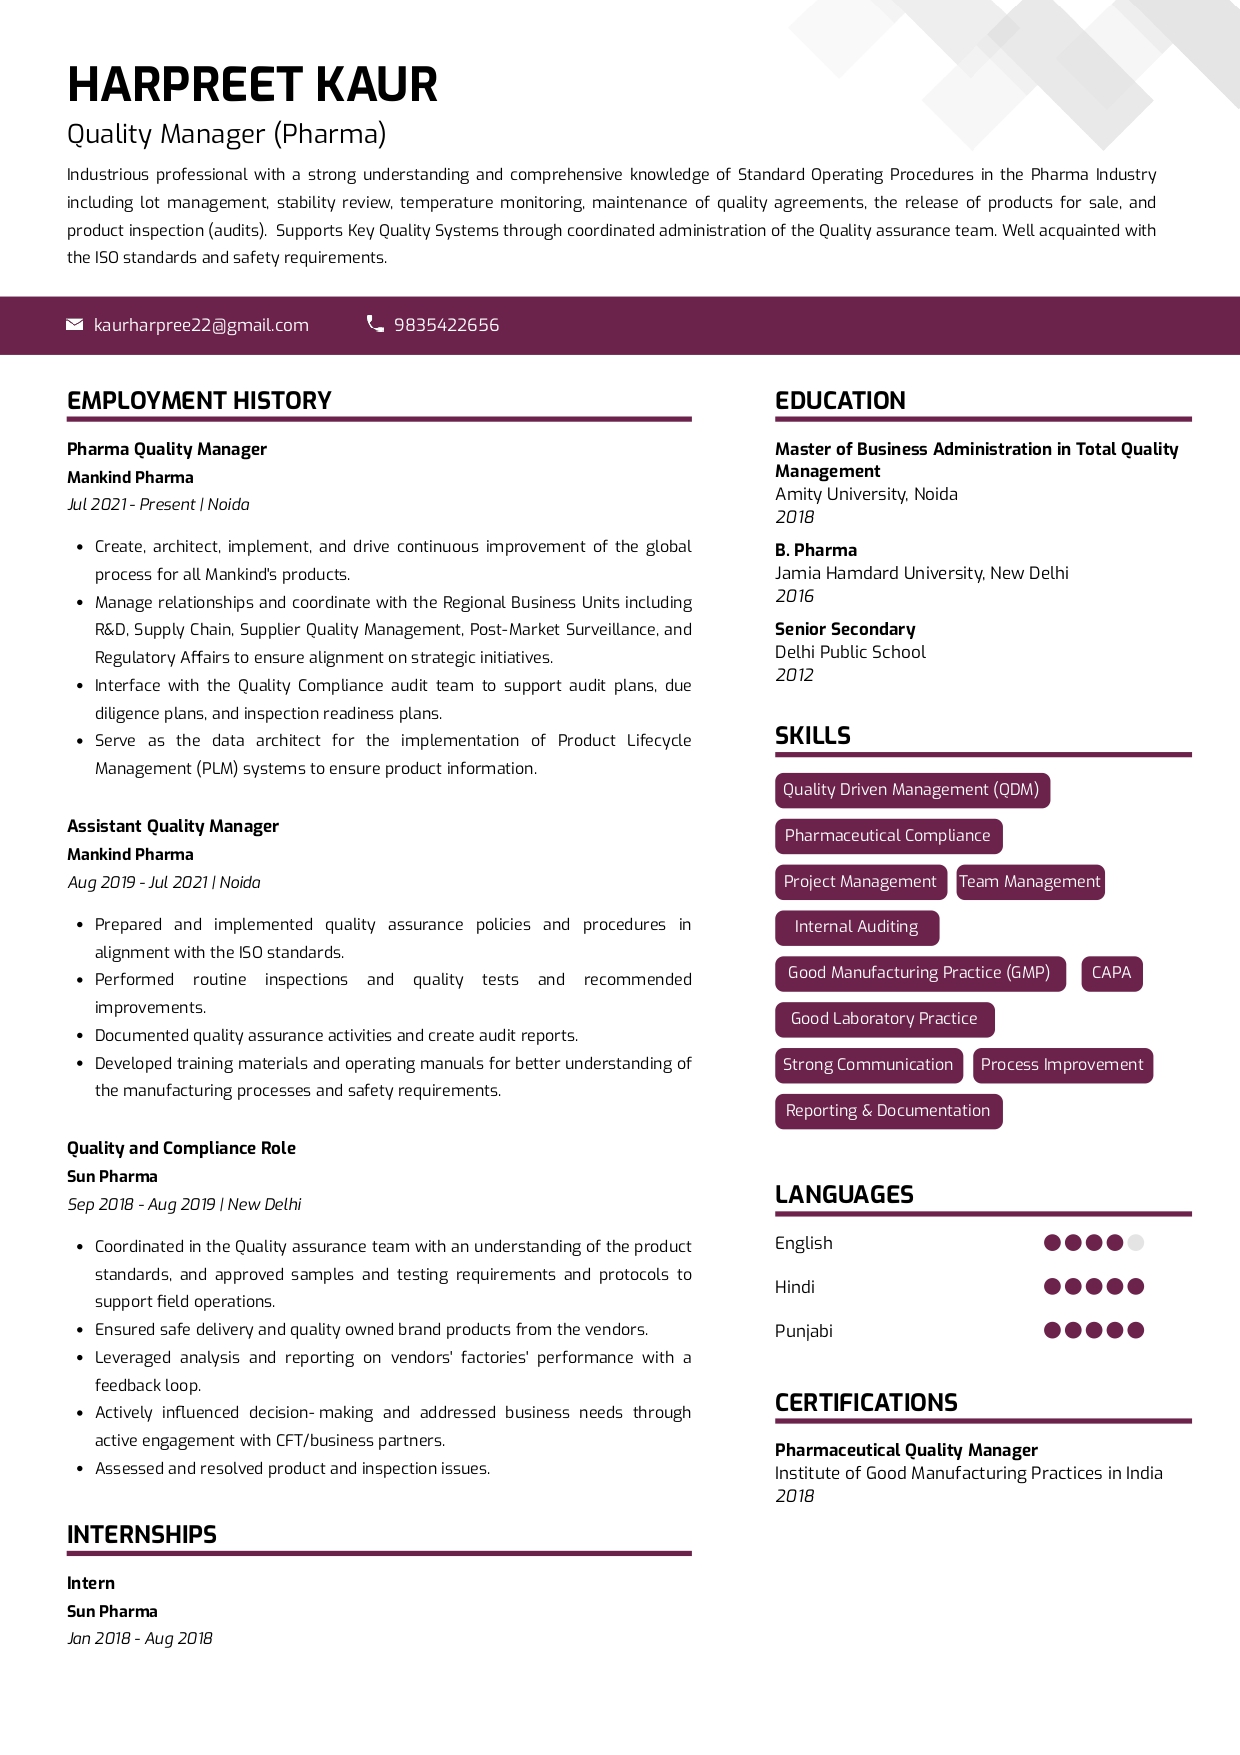 Resume of Quality Manager - Pharma